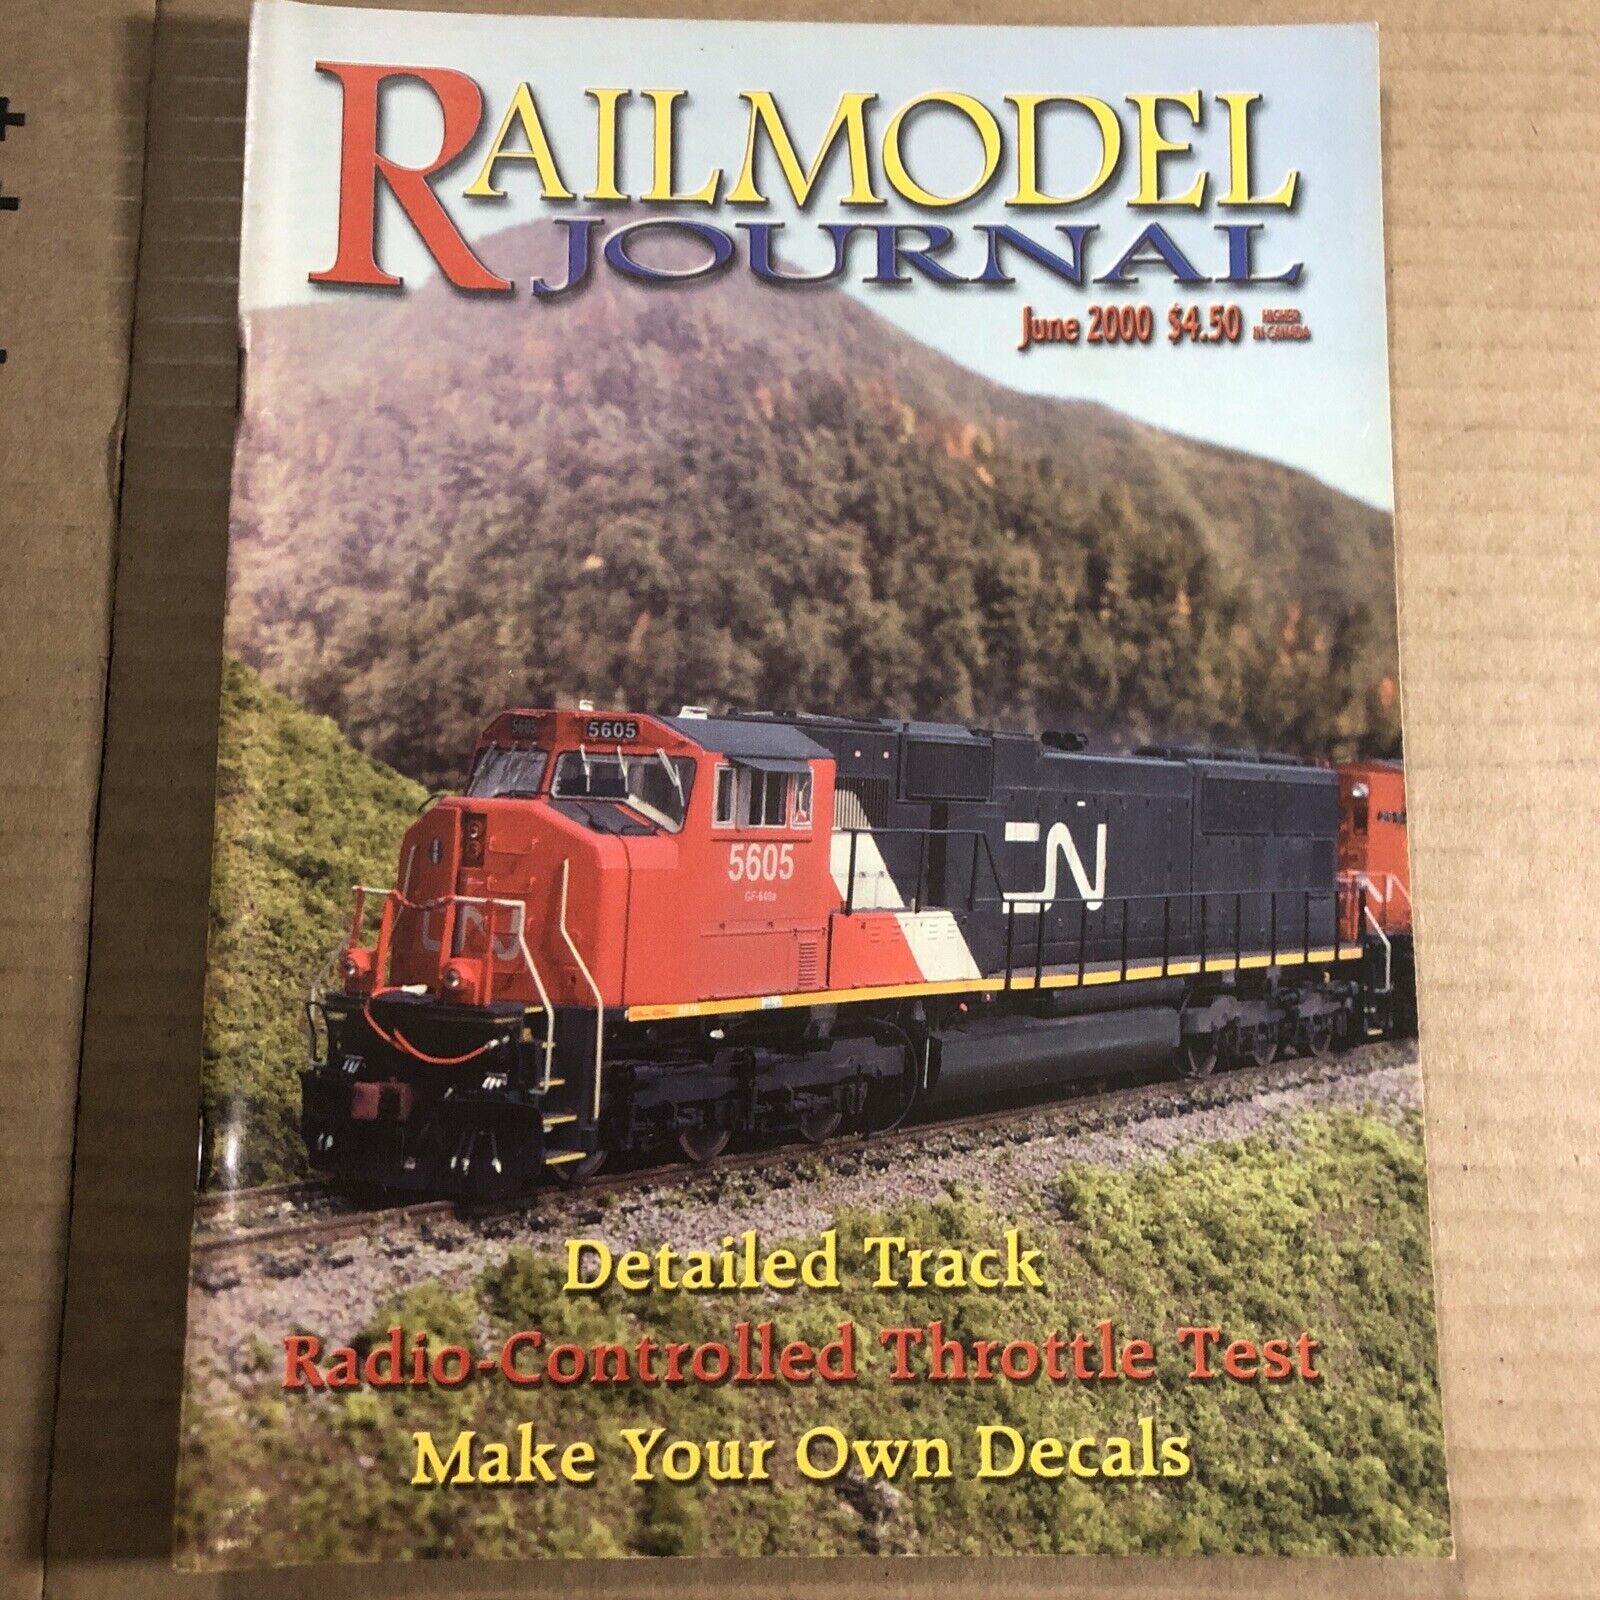 RailModel Journal 2000 June Detailed Track Make Your Own Decals